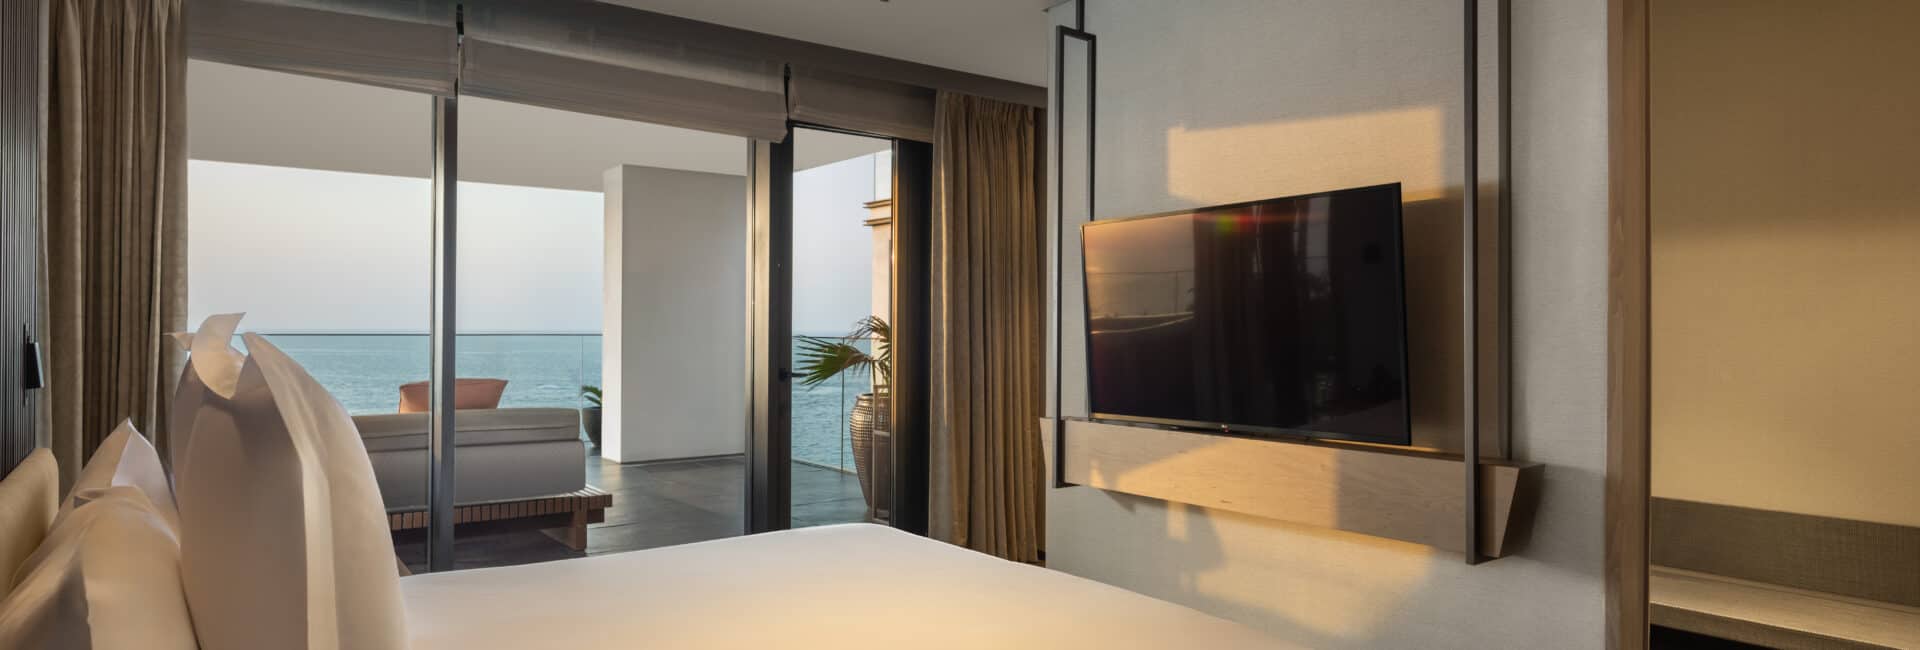 Banyan Tree Dubai -Harmony 2-Bedroom Oceanfront Presidential Suite